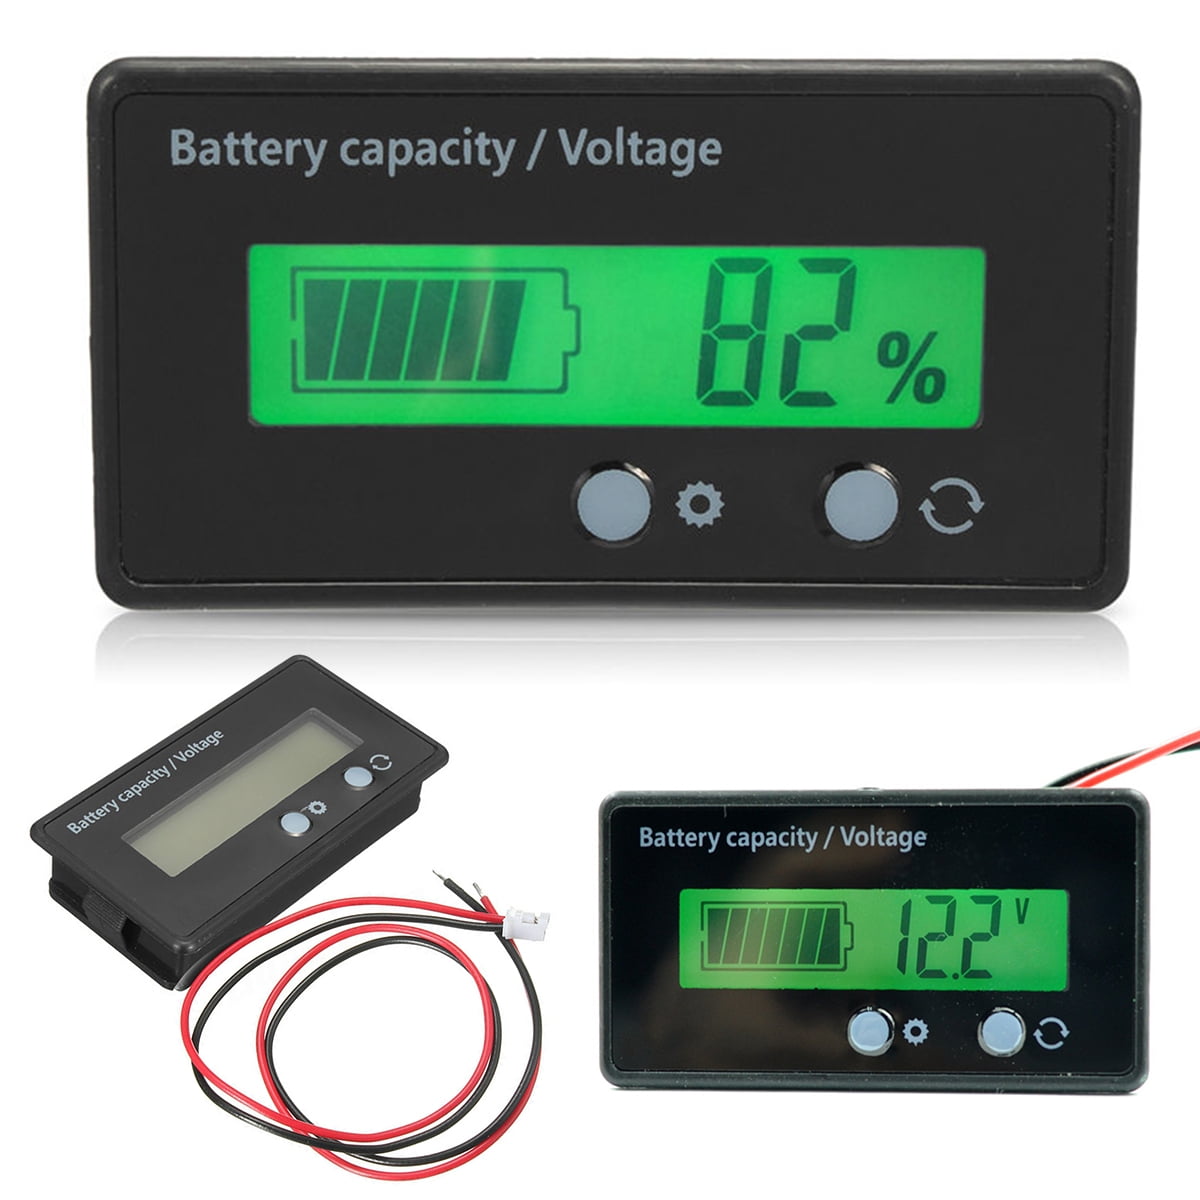 Details about   12V LED ACID Lead Battery Capacity Indicator Voltmeter Meter Tester with Alarm 